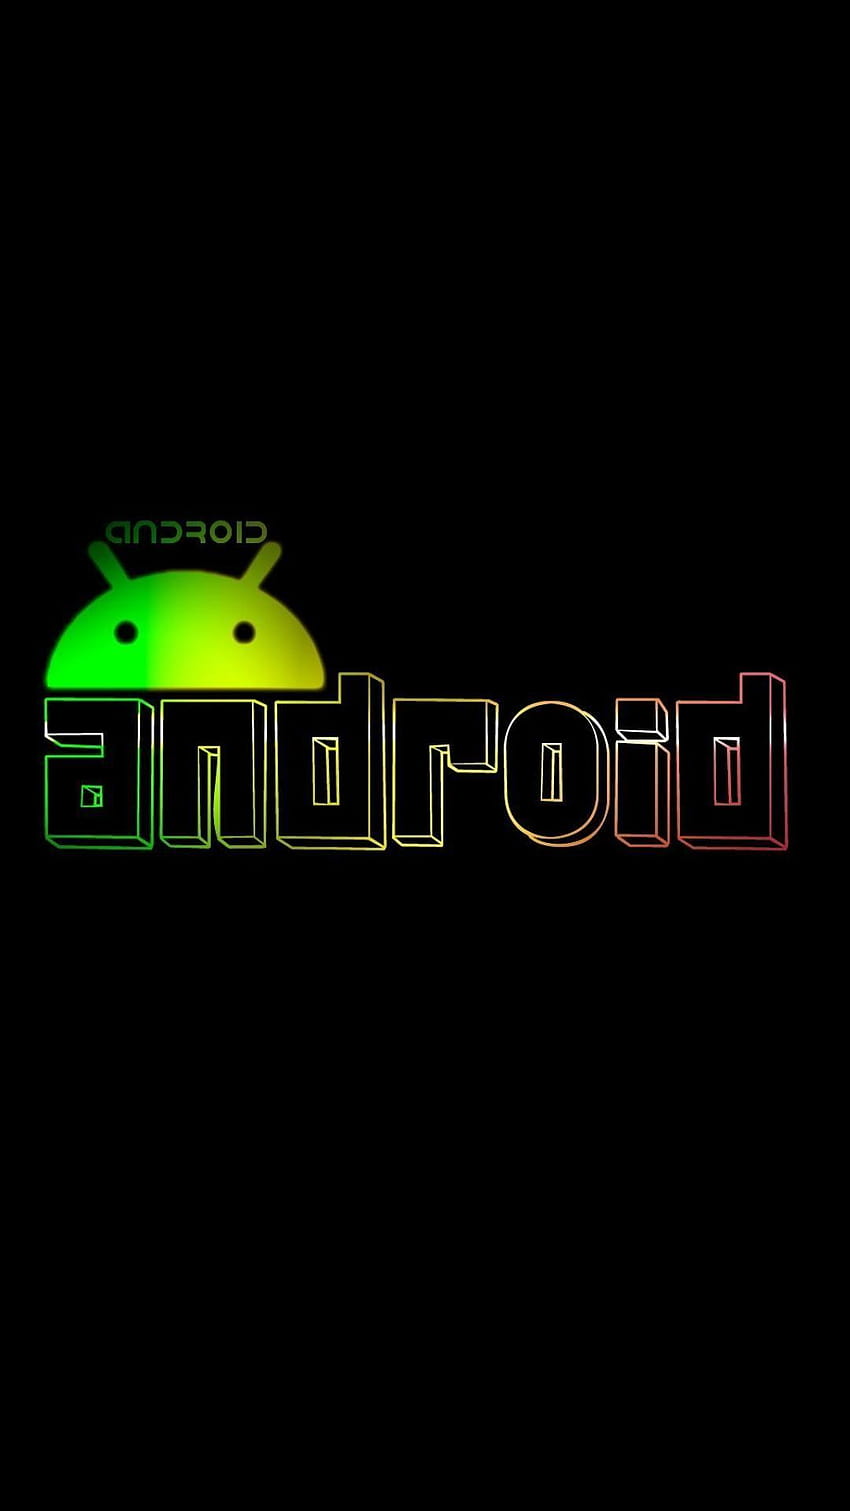 Linux ubuntu android firefox logos windows logo, blackberry logo mobile HD phone wallpaper